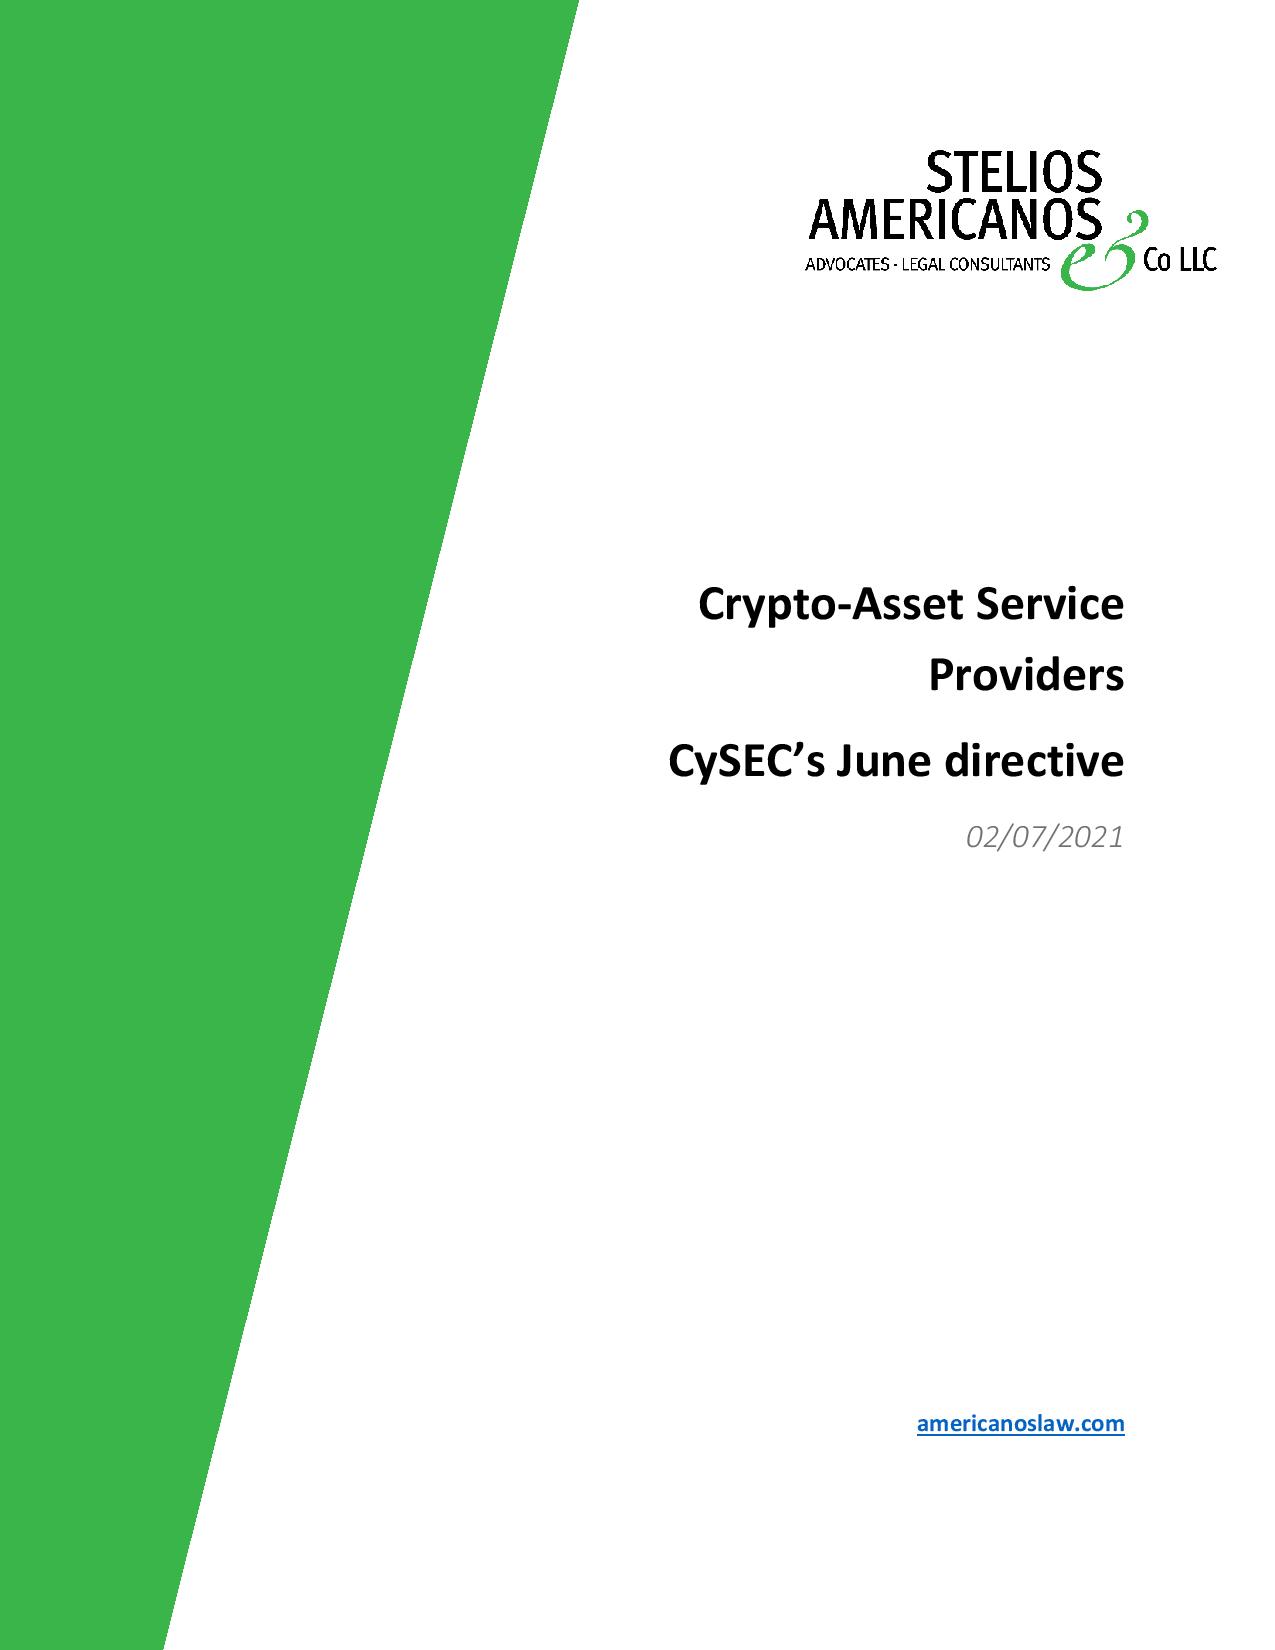 Stelios Americanos & Co LLC: Crypto-Asset Service Providers CySEC’s June directive